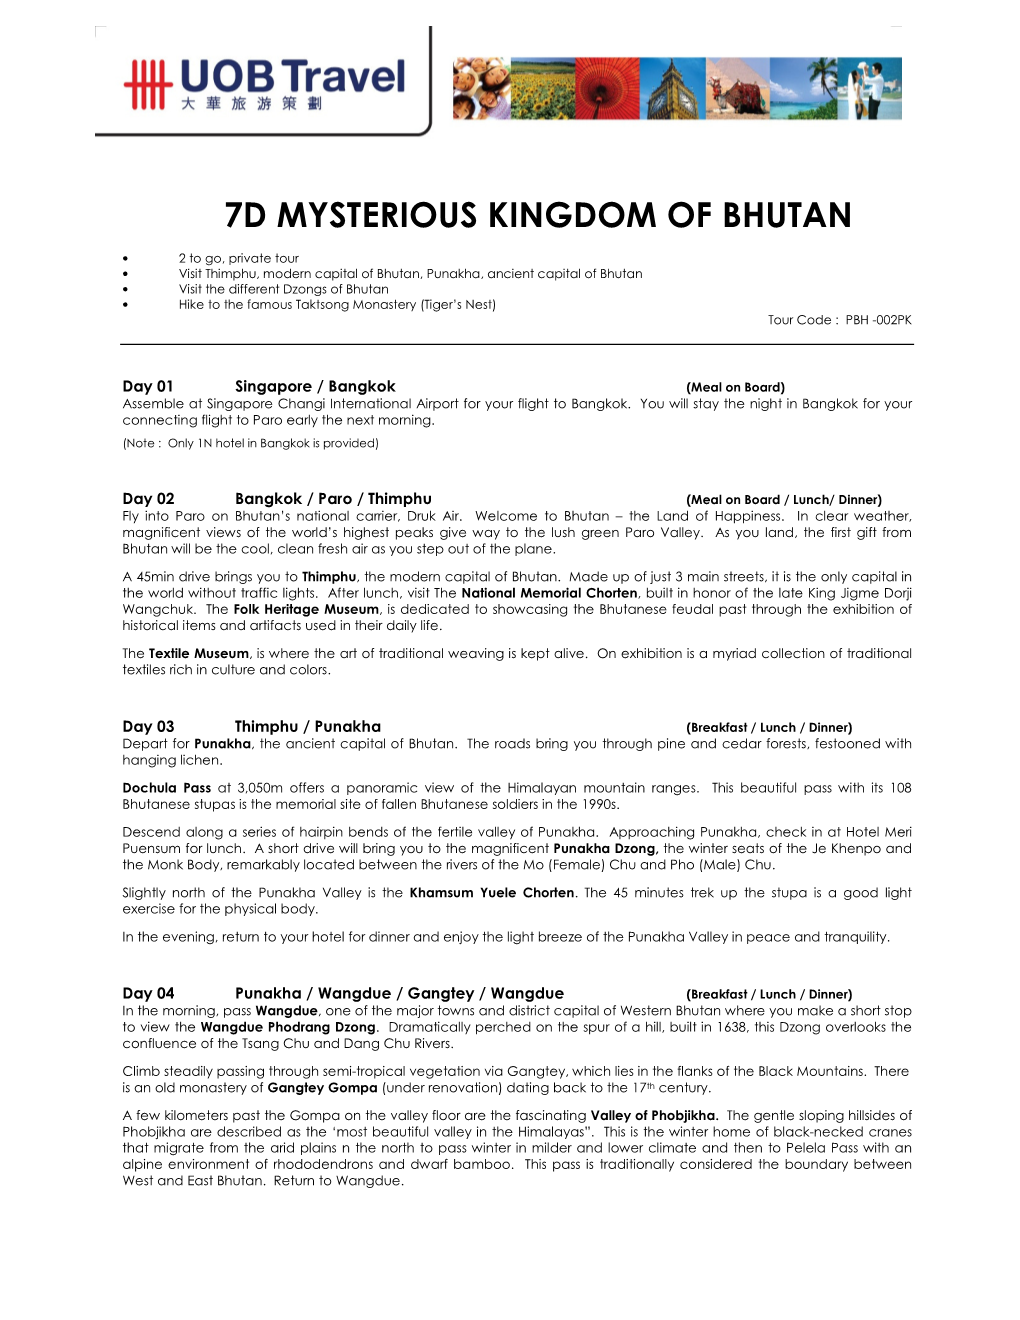 7D Mysterious Kingdom of Bhutan